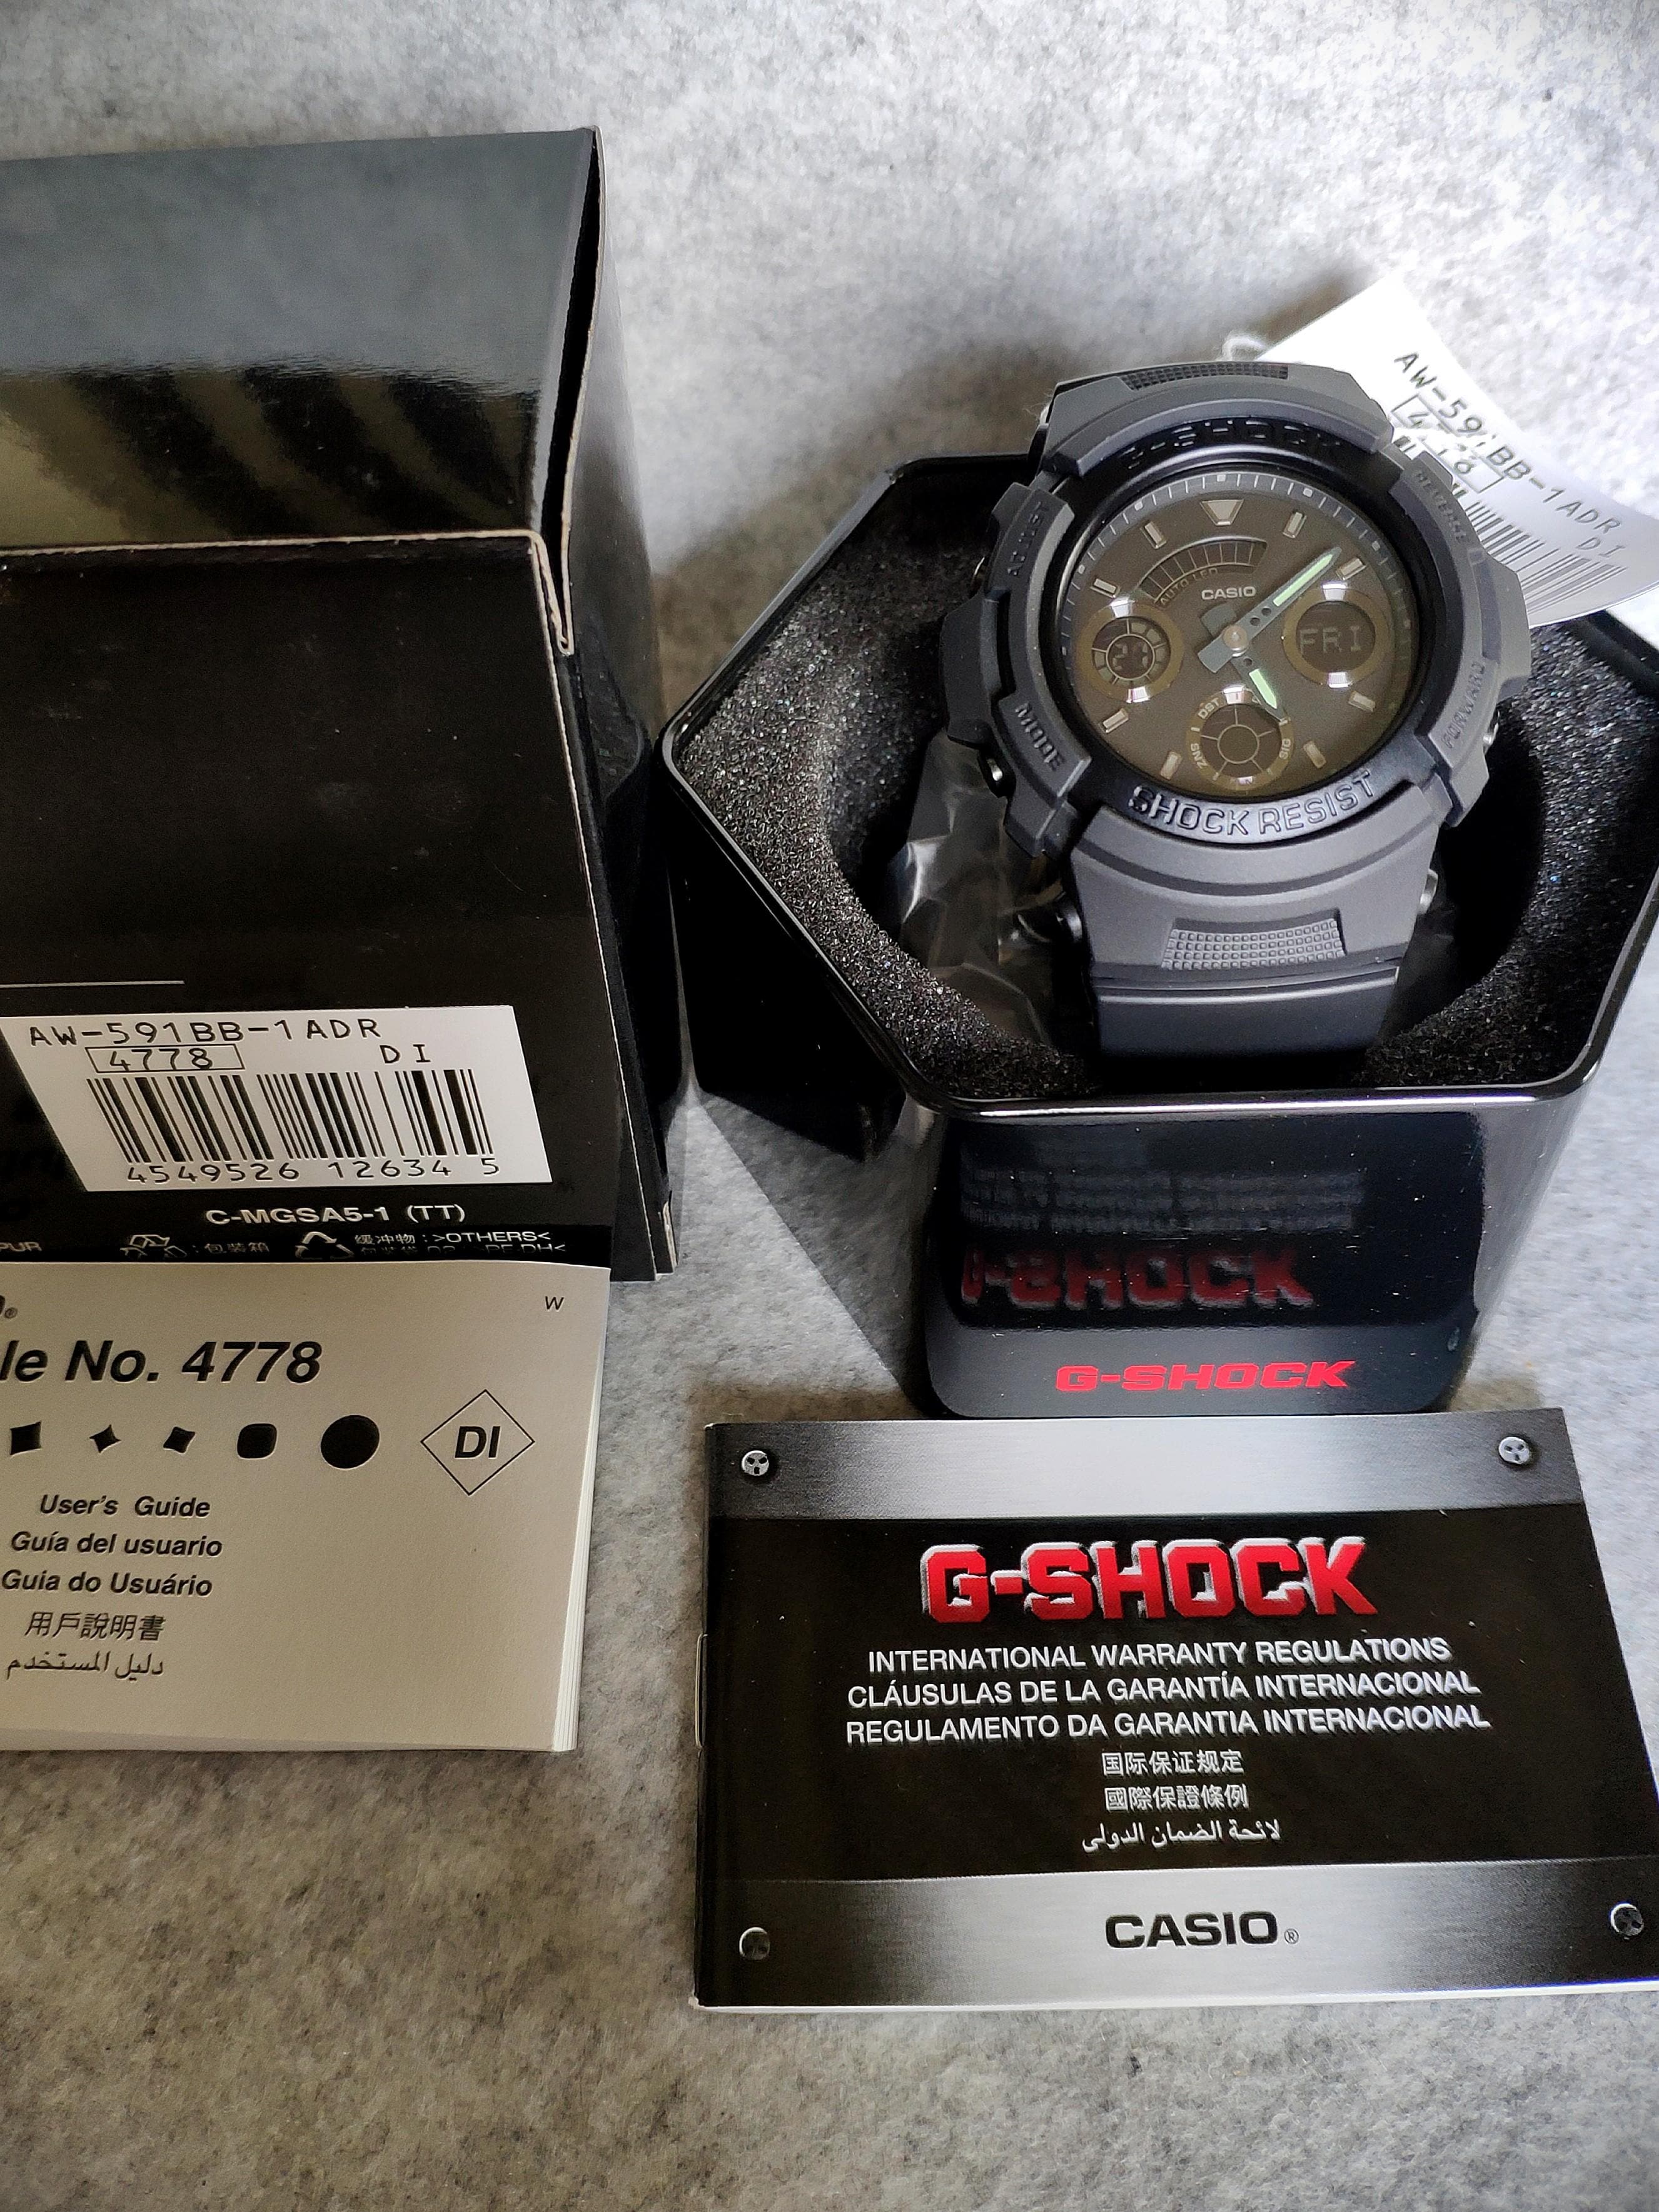 G-SHOCK 腕時計 AW-591BB - 腕時計(デジタル)